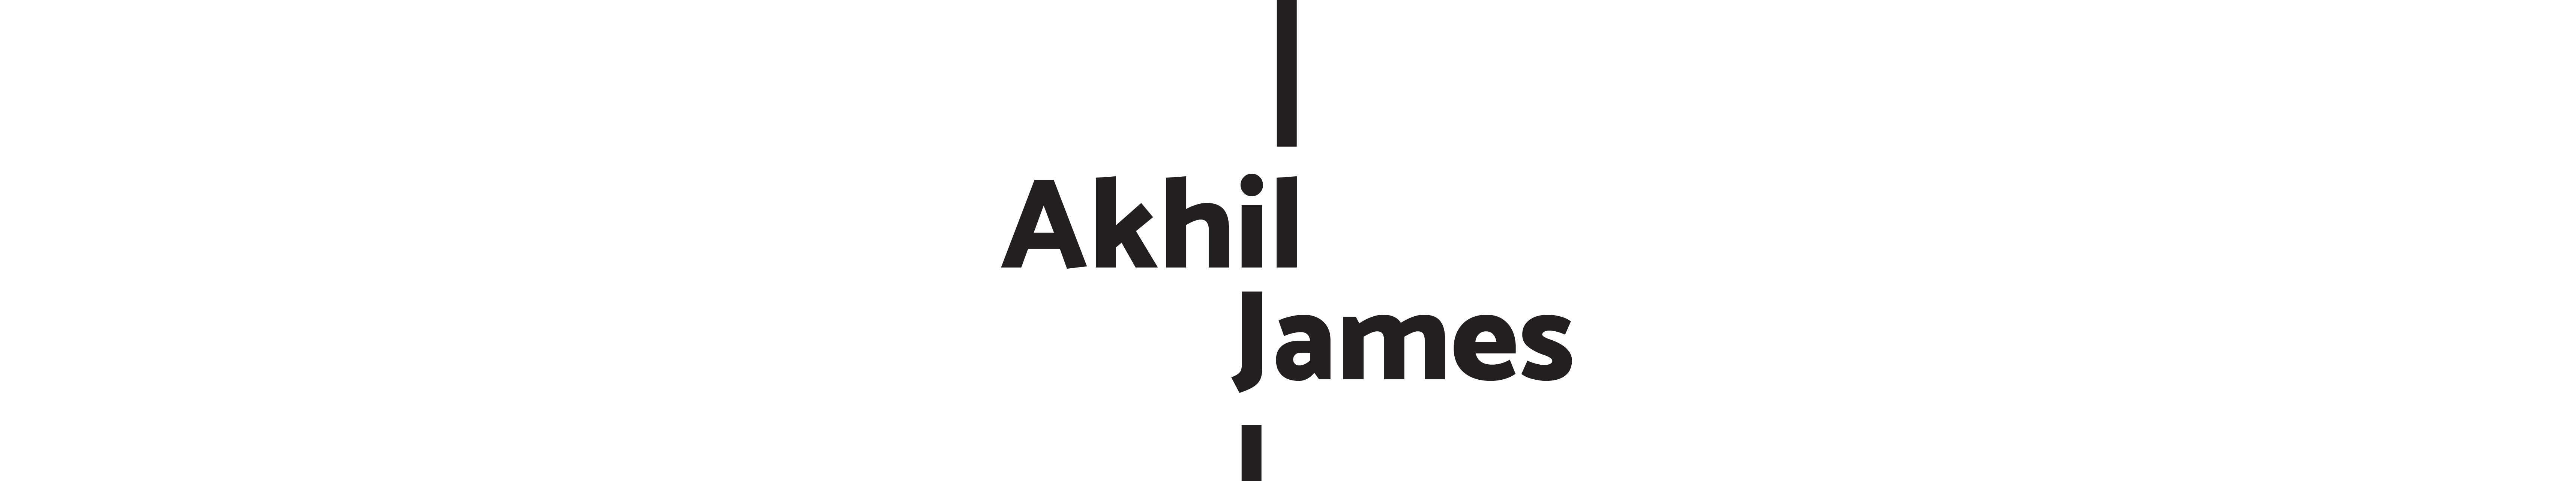 Akhil James's profile banner